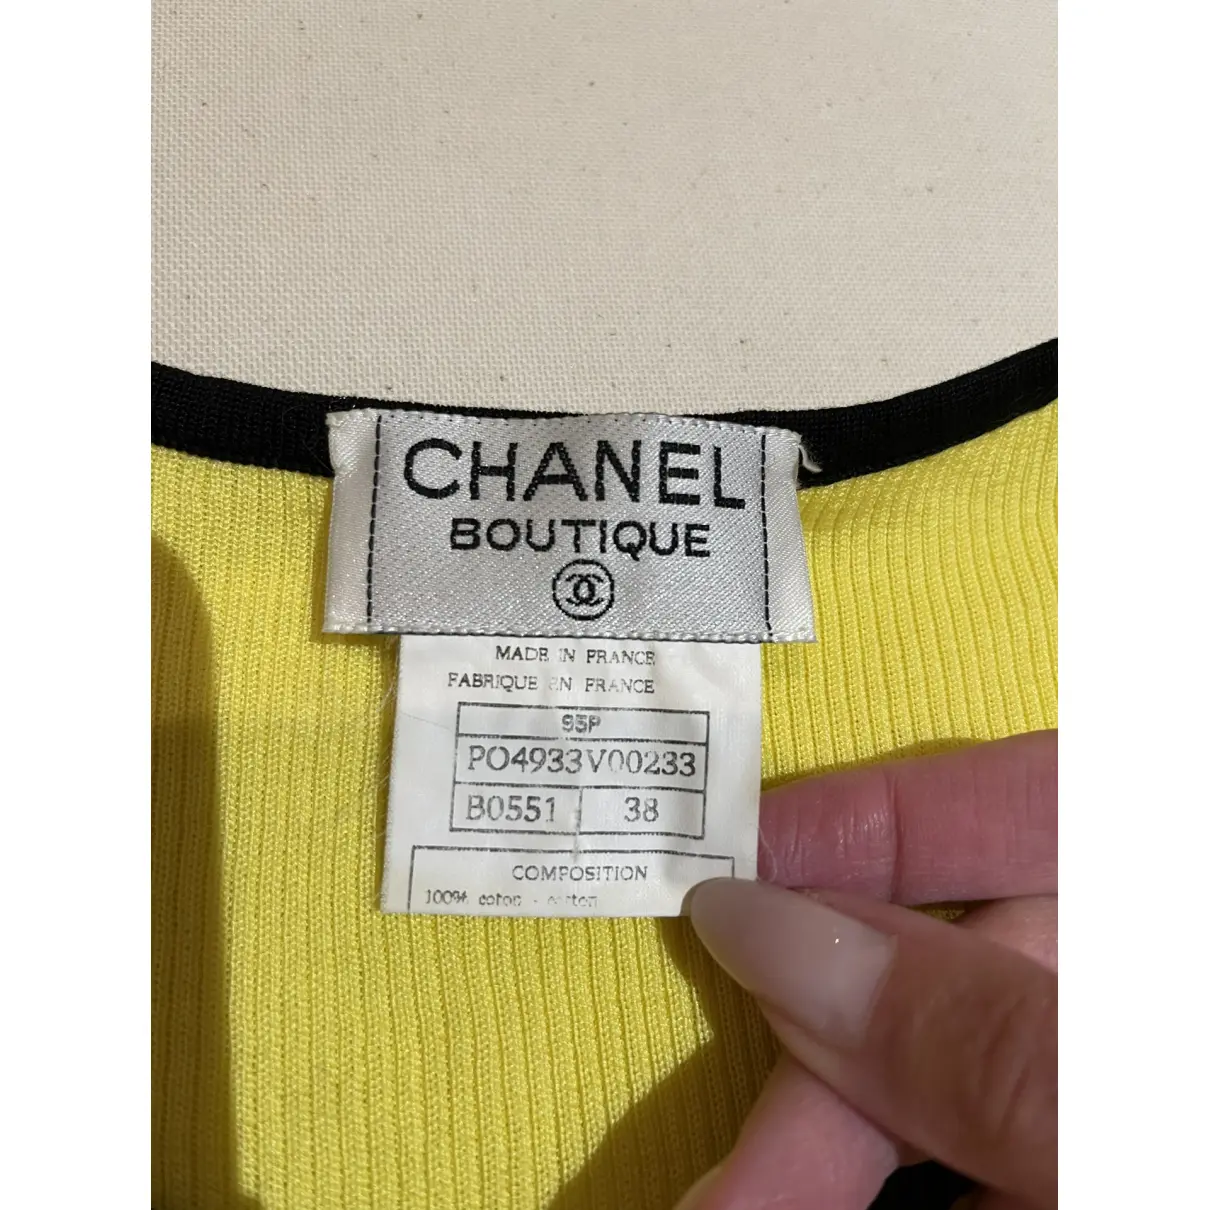 Buy Chanel Top online - Vintage